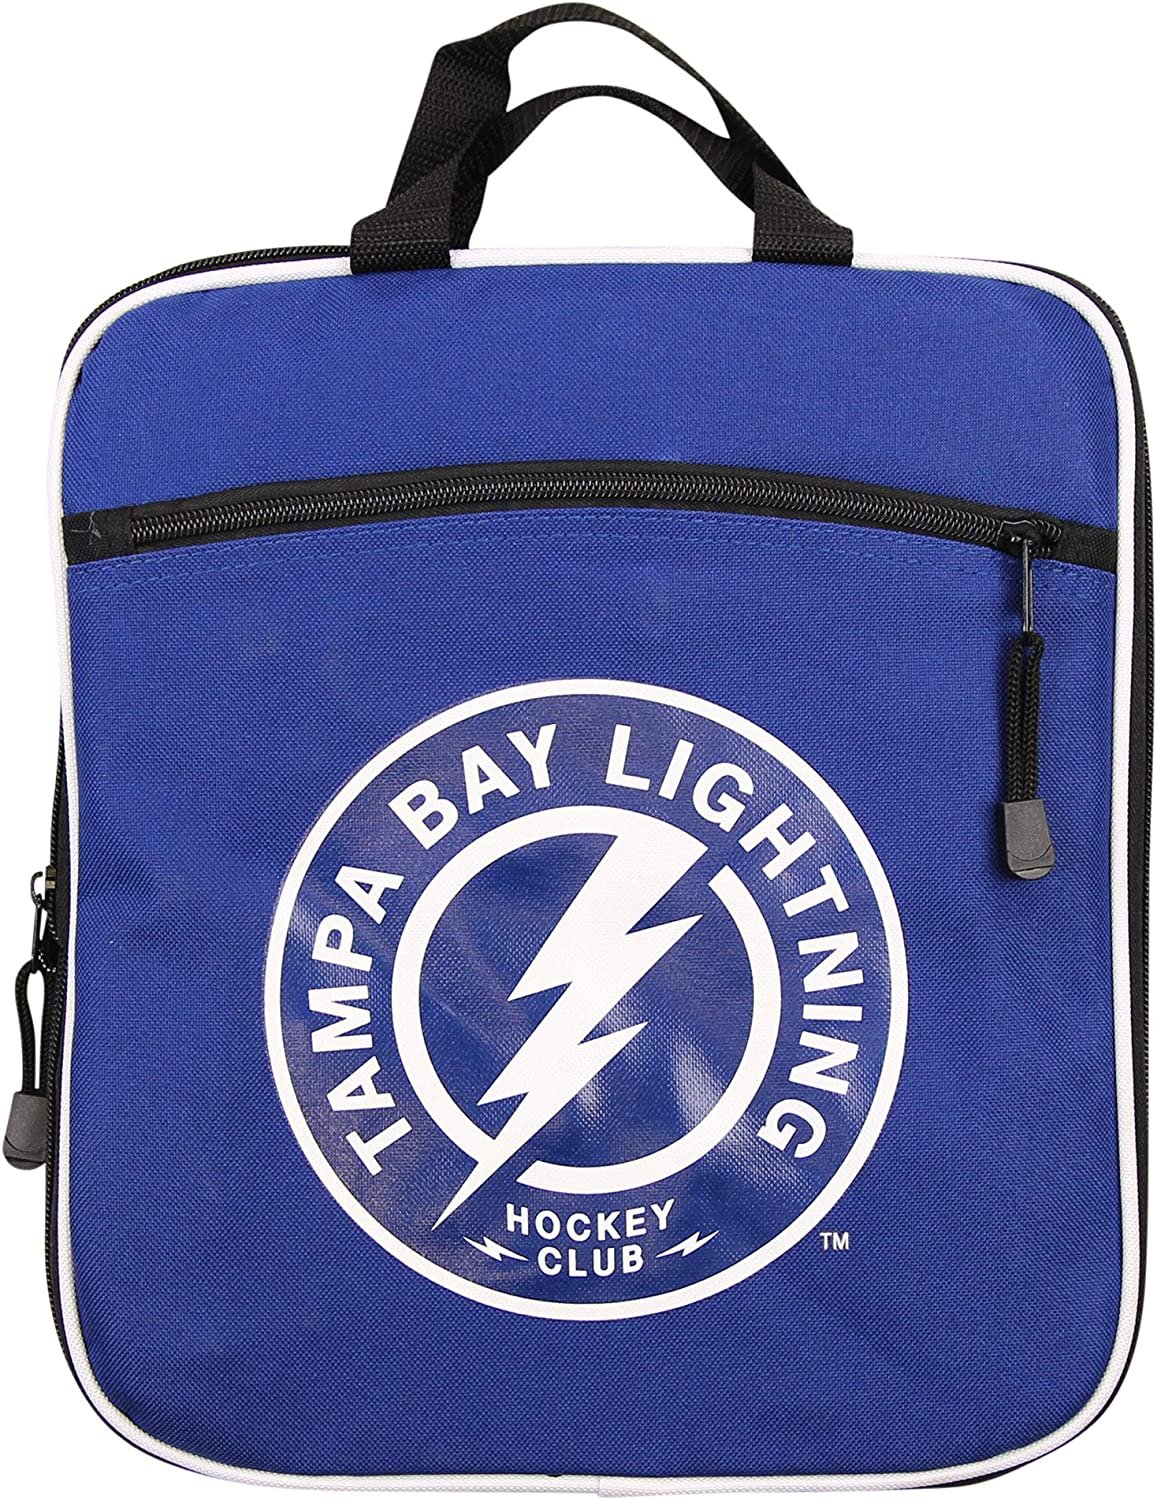 Tampa Bay Lightning Shoulder Duffle Bag Unisex Adult Steal Design 28x11x12 Inch Large Extended